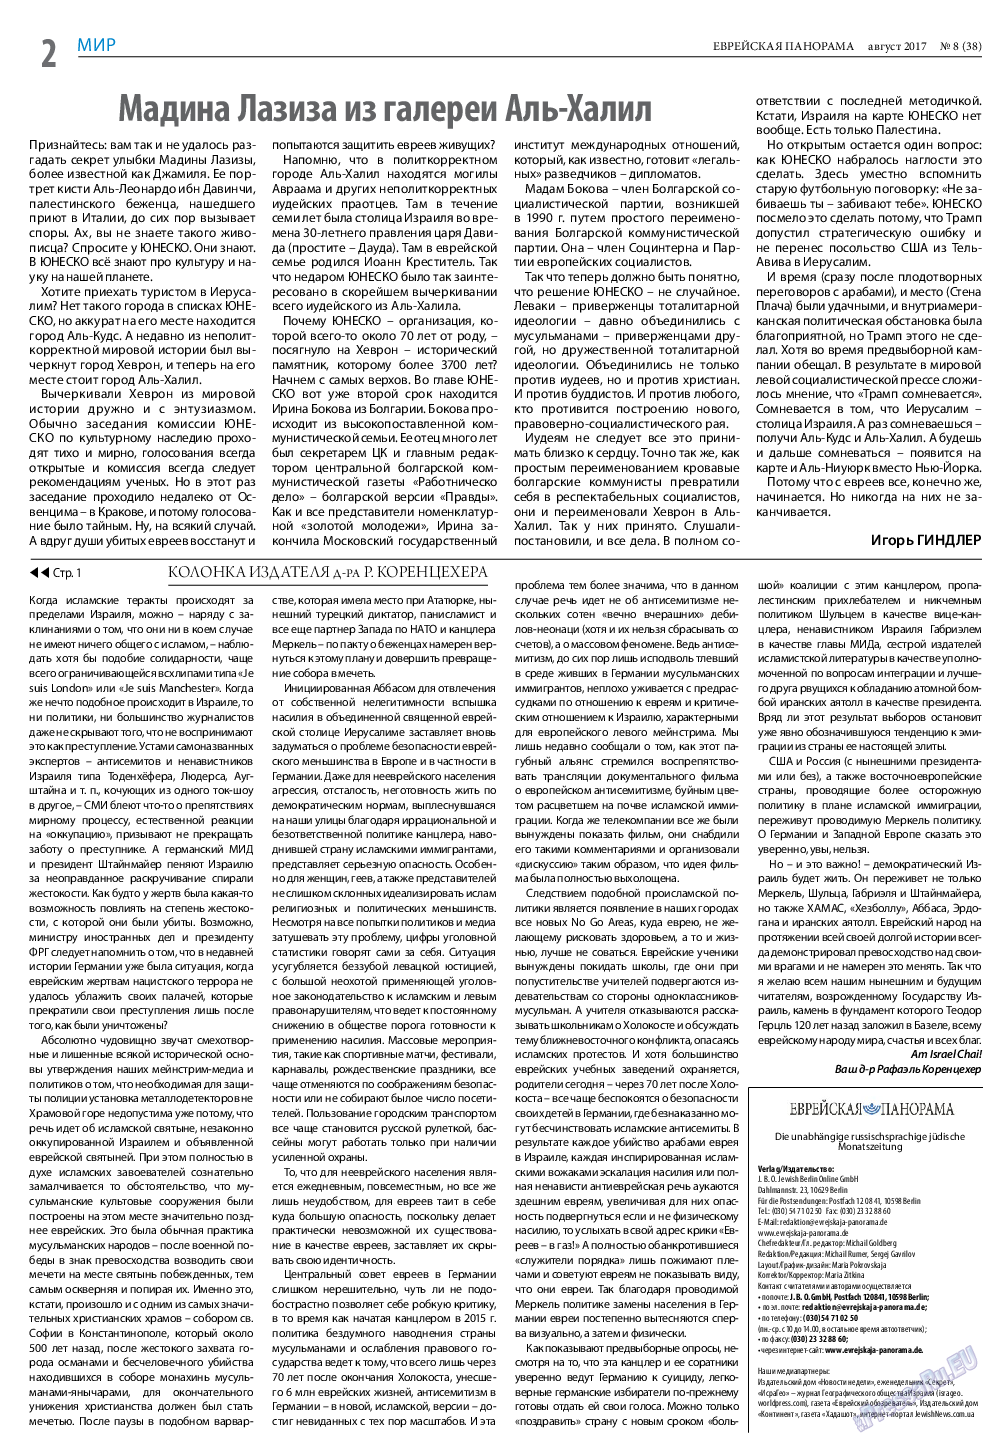 Еврейская панорама, газета. 2017 №8 стр.2